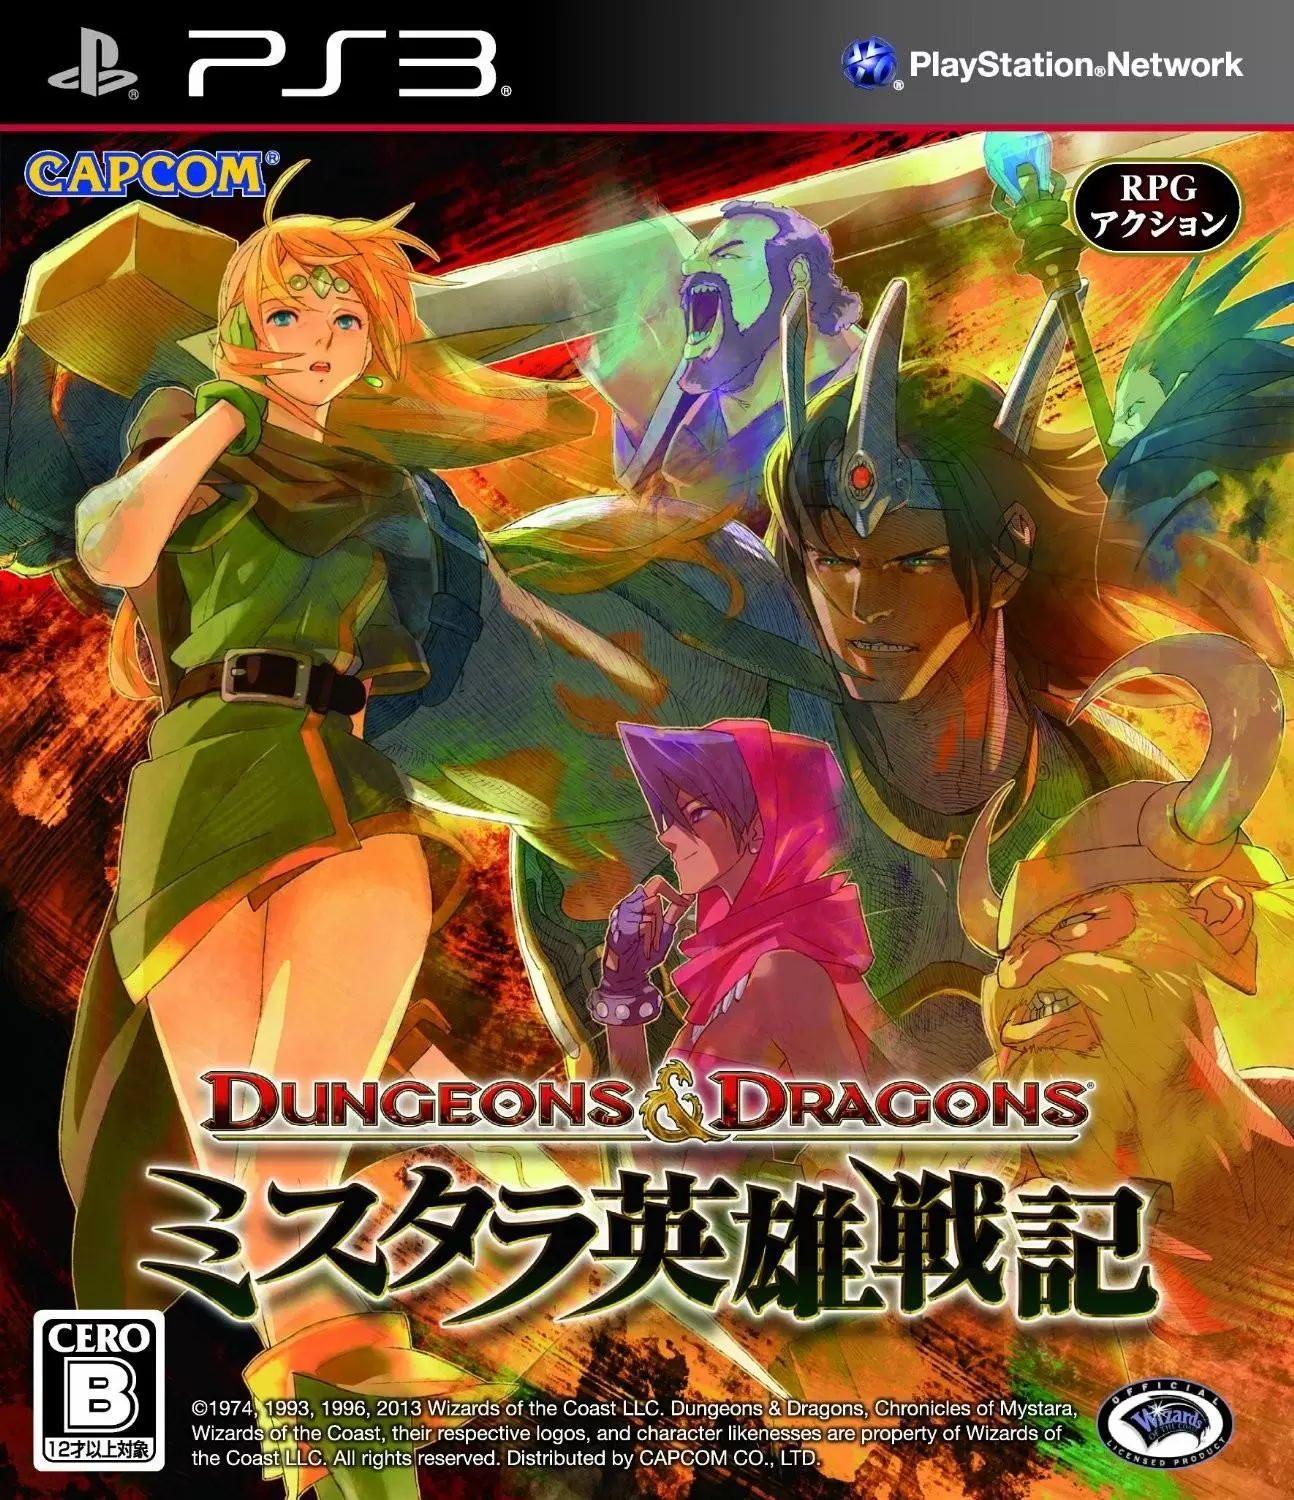 PS3 Games - Dungeons & Dragons: Chronicles of Mystara